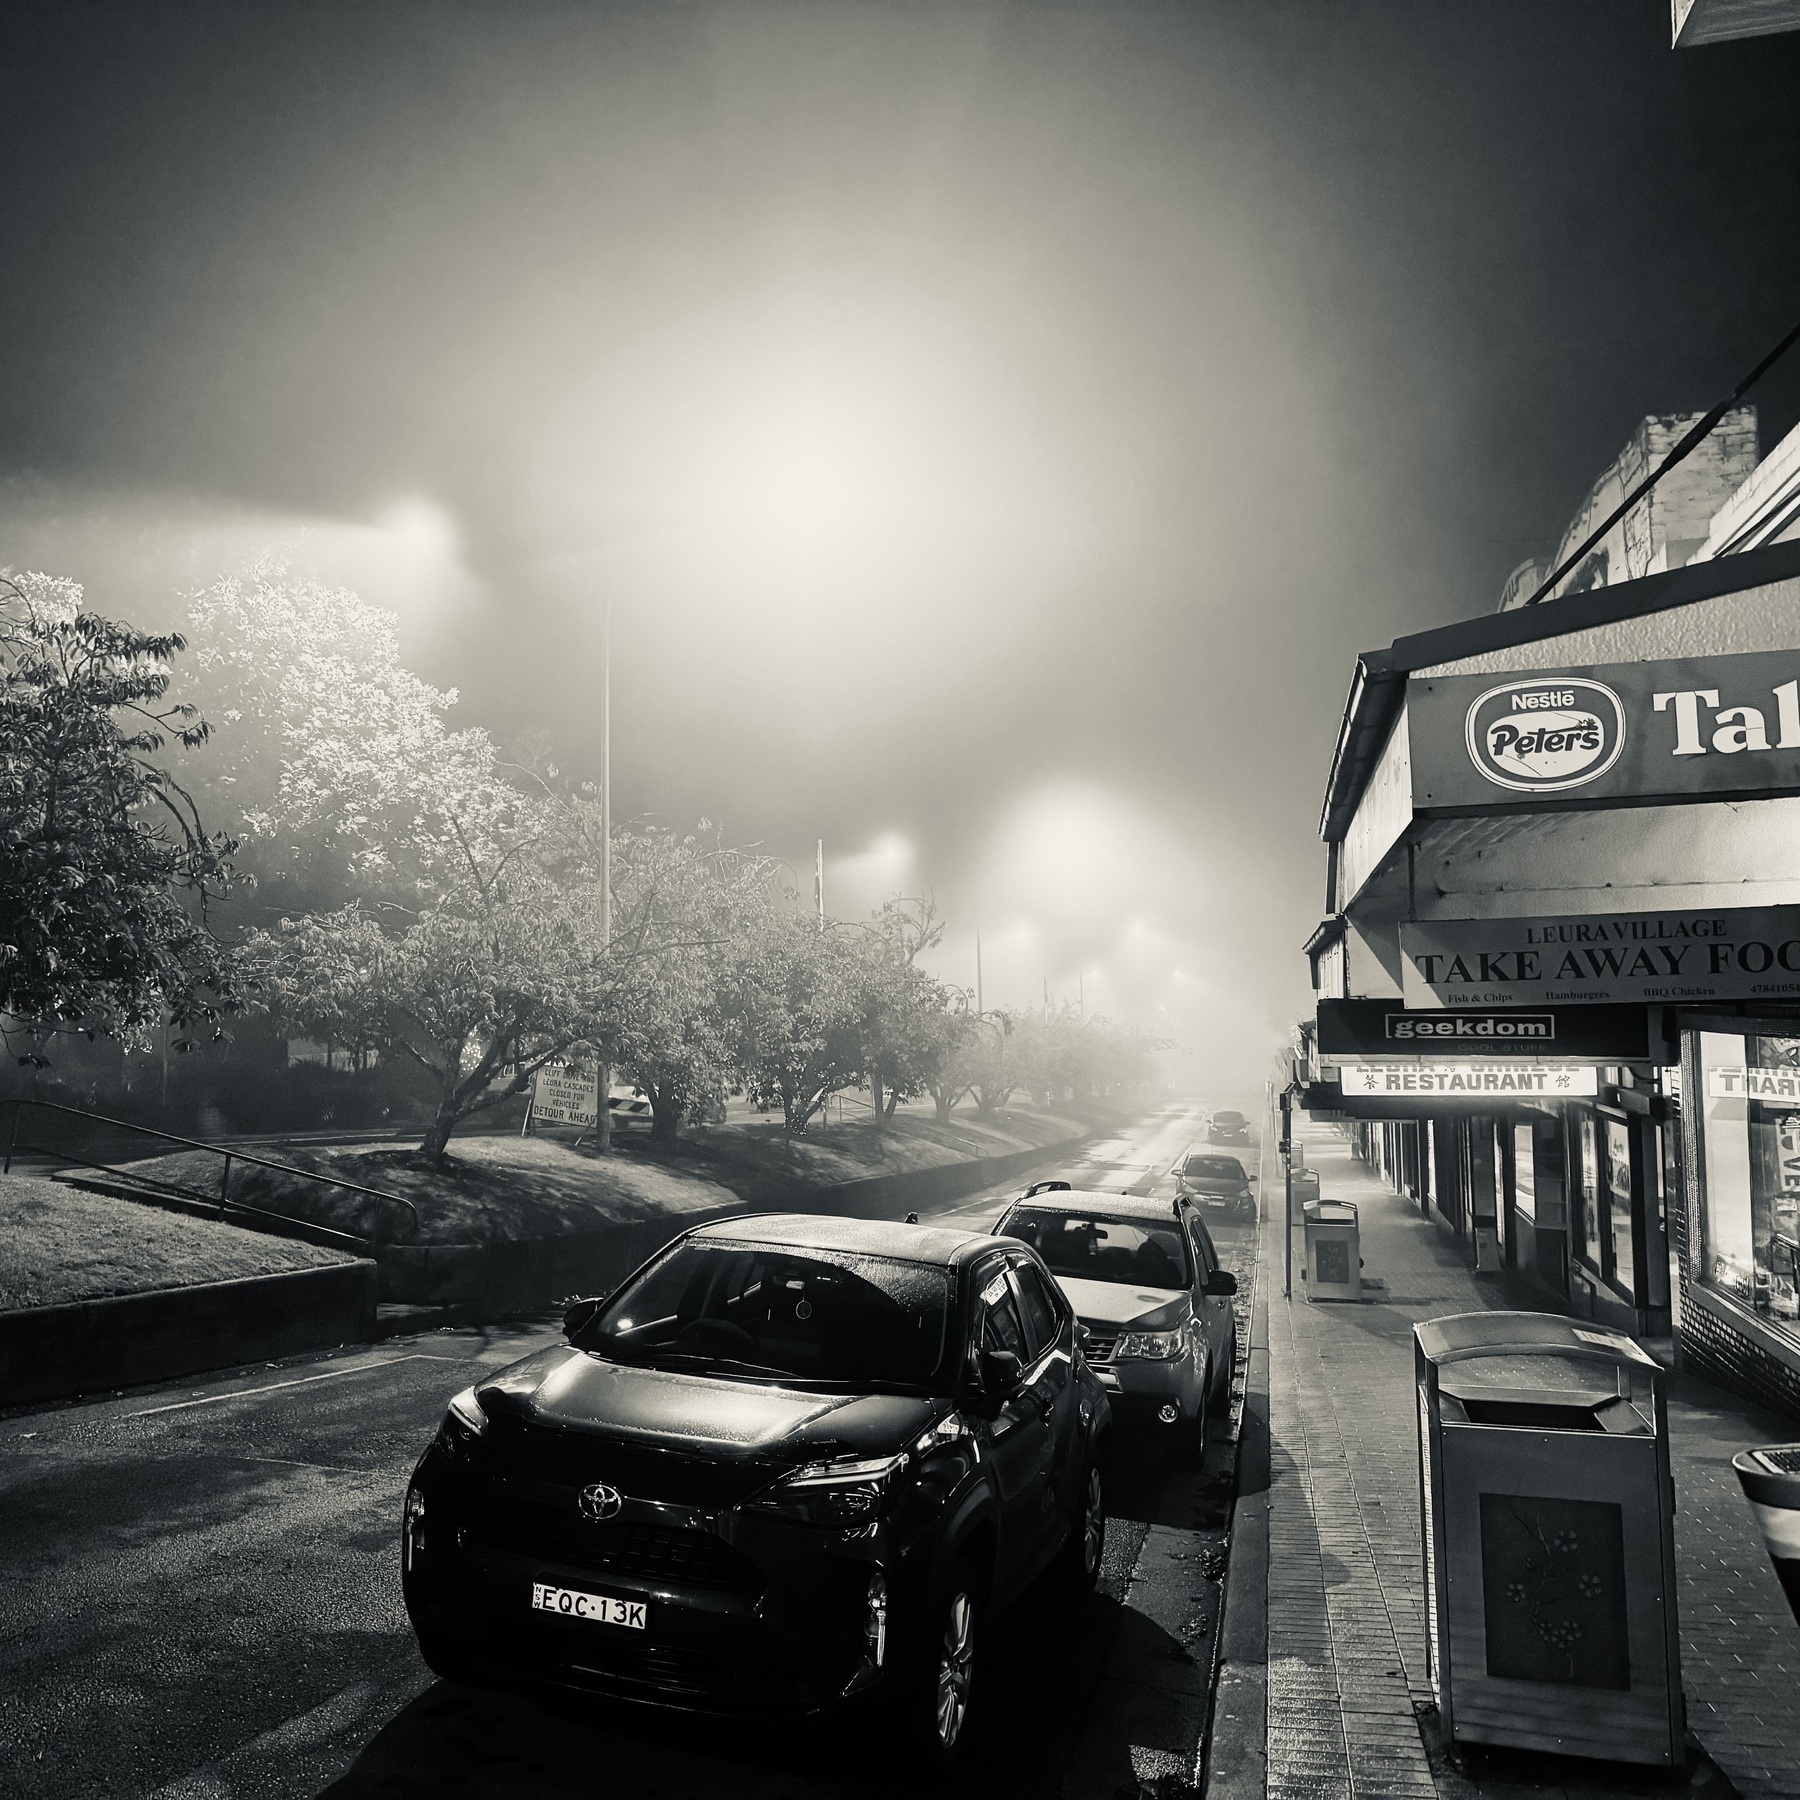 A quiet street at night, slightly misty.